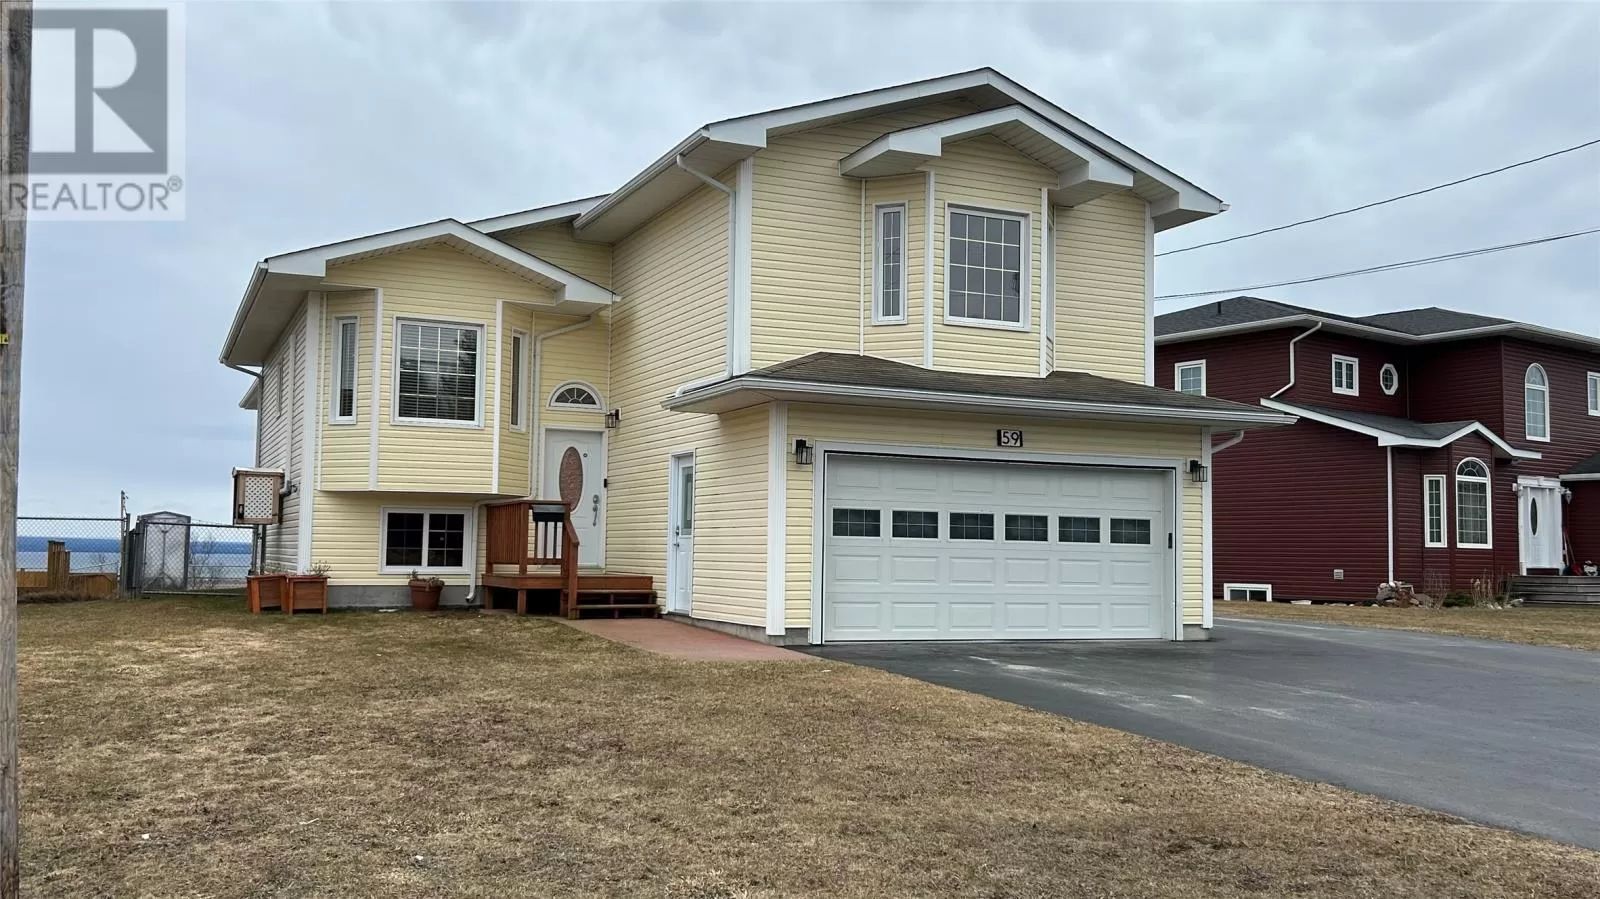 House for rent: 59 Maryland Drive, Stephenville, Newfoundland & Labrador A2N 2V7